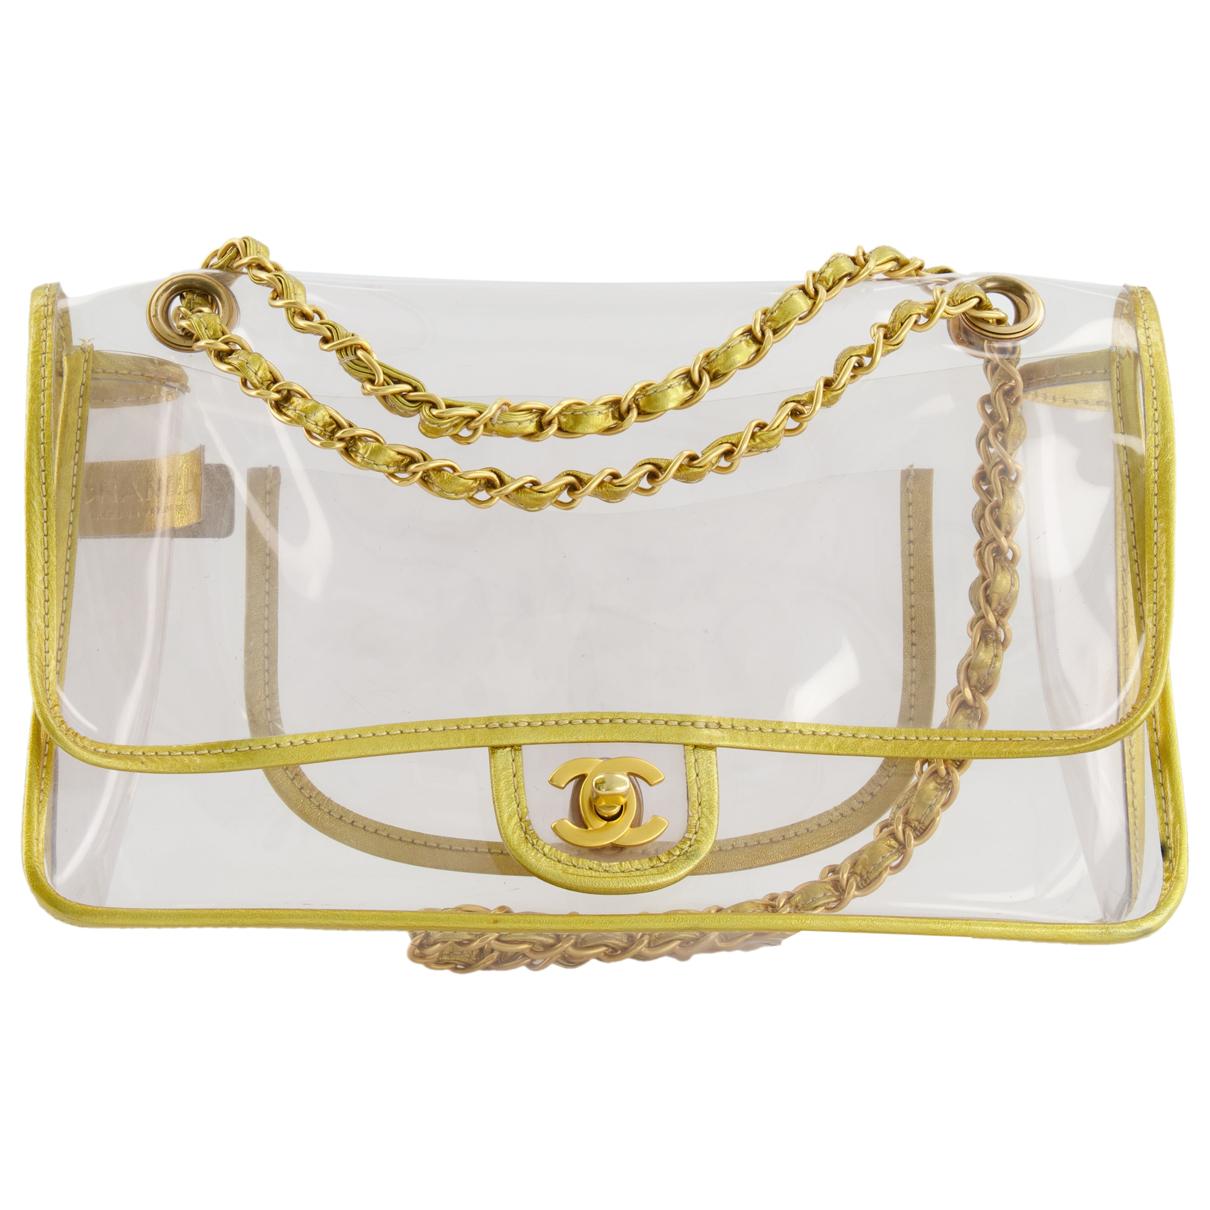 Timeless/classique handbag Chanel Gold in Plastic - 37260144